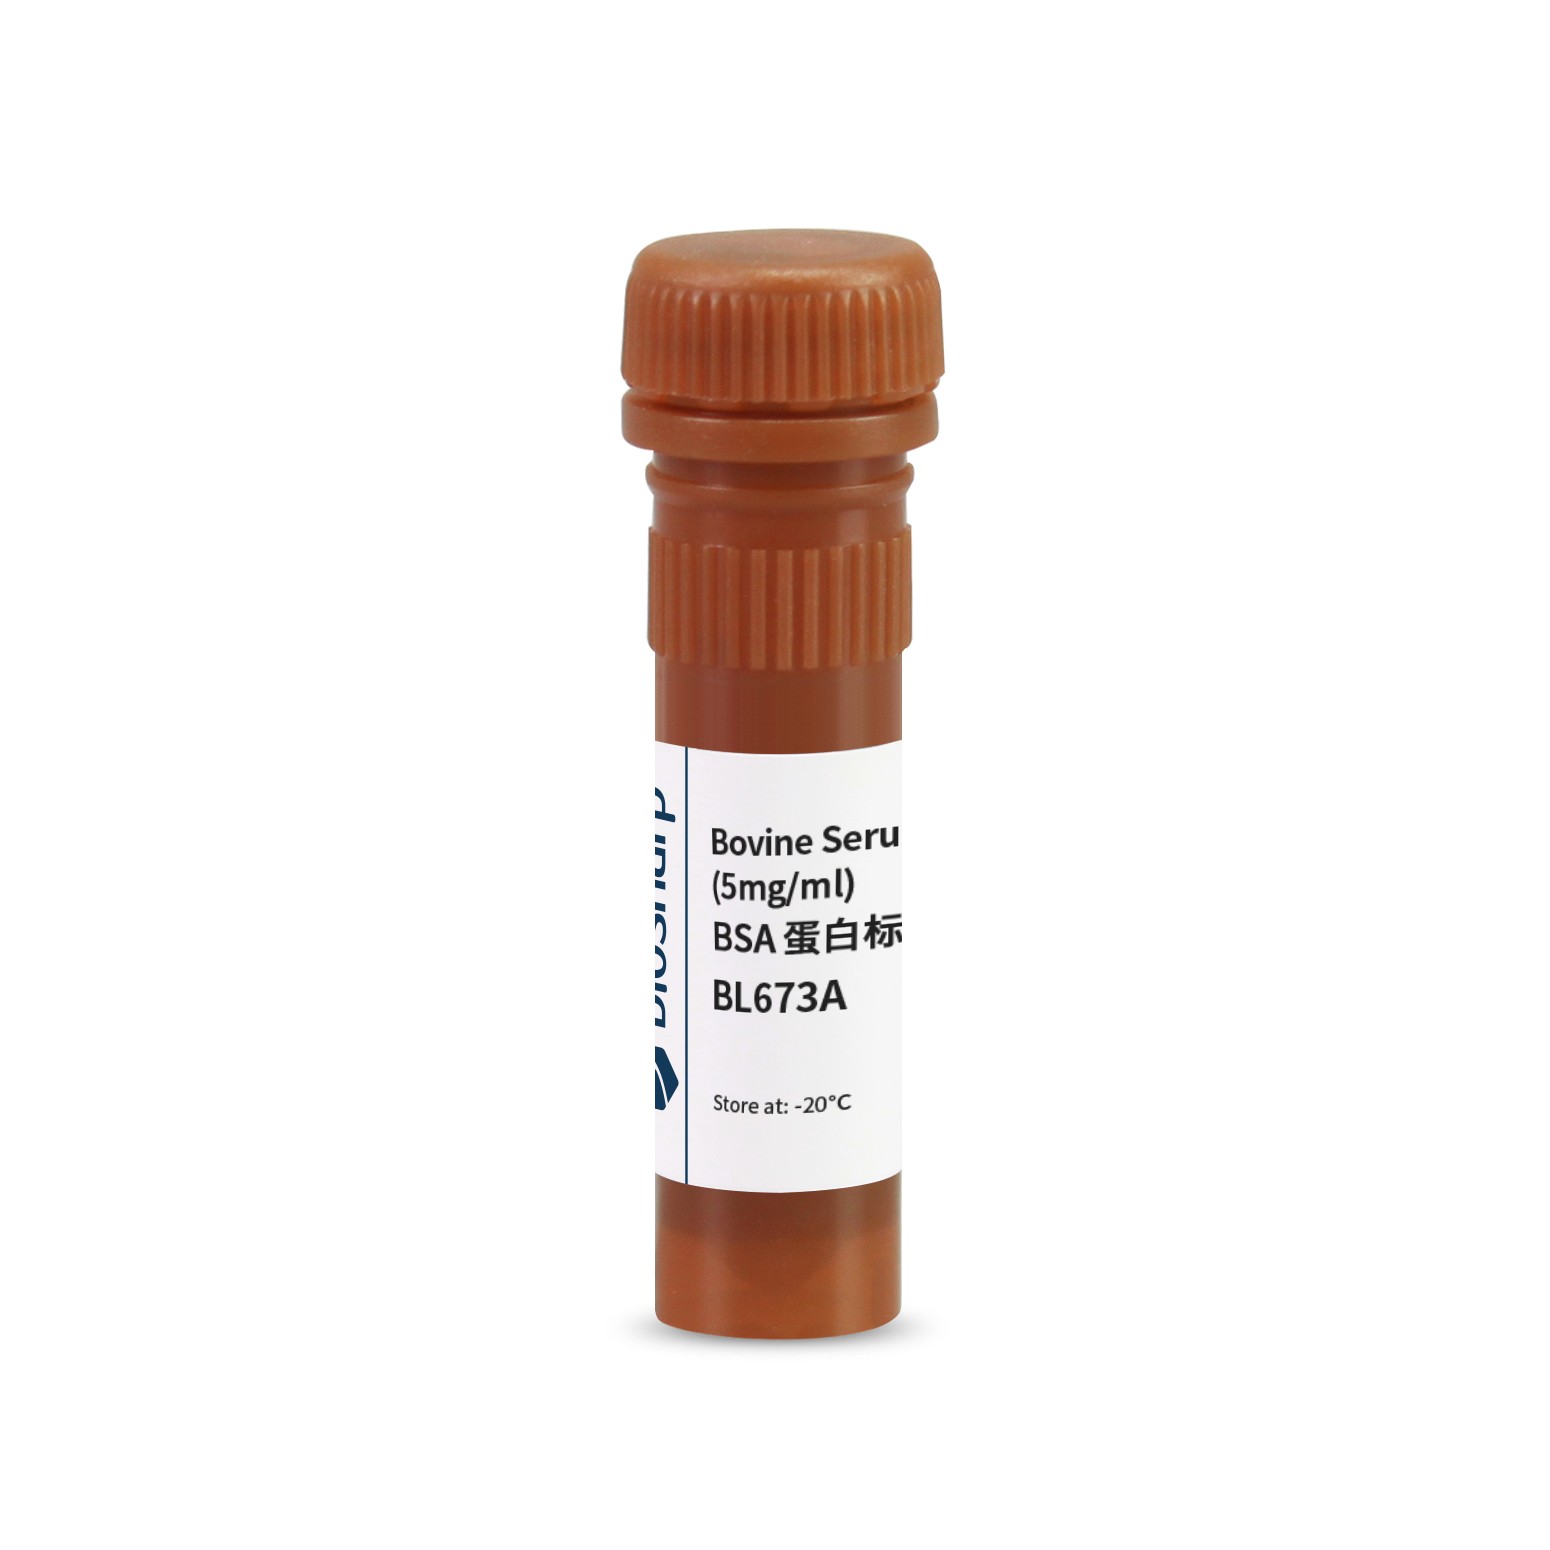 BSA 蛋白标准品（5mg/ml）